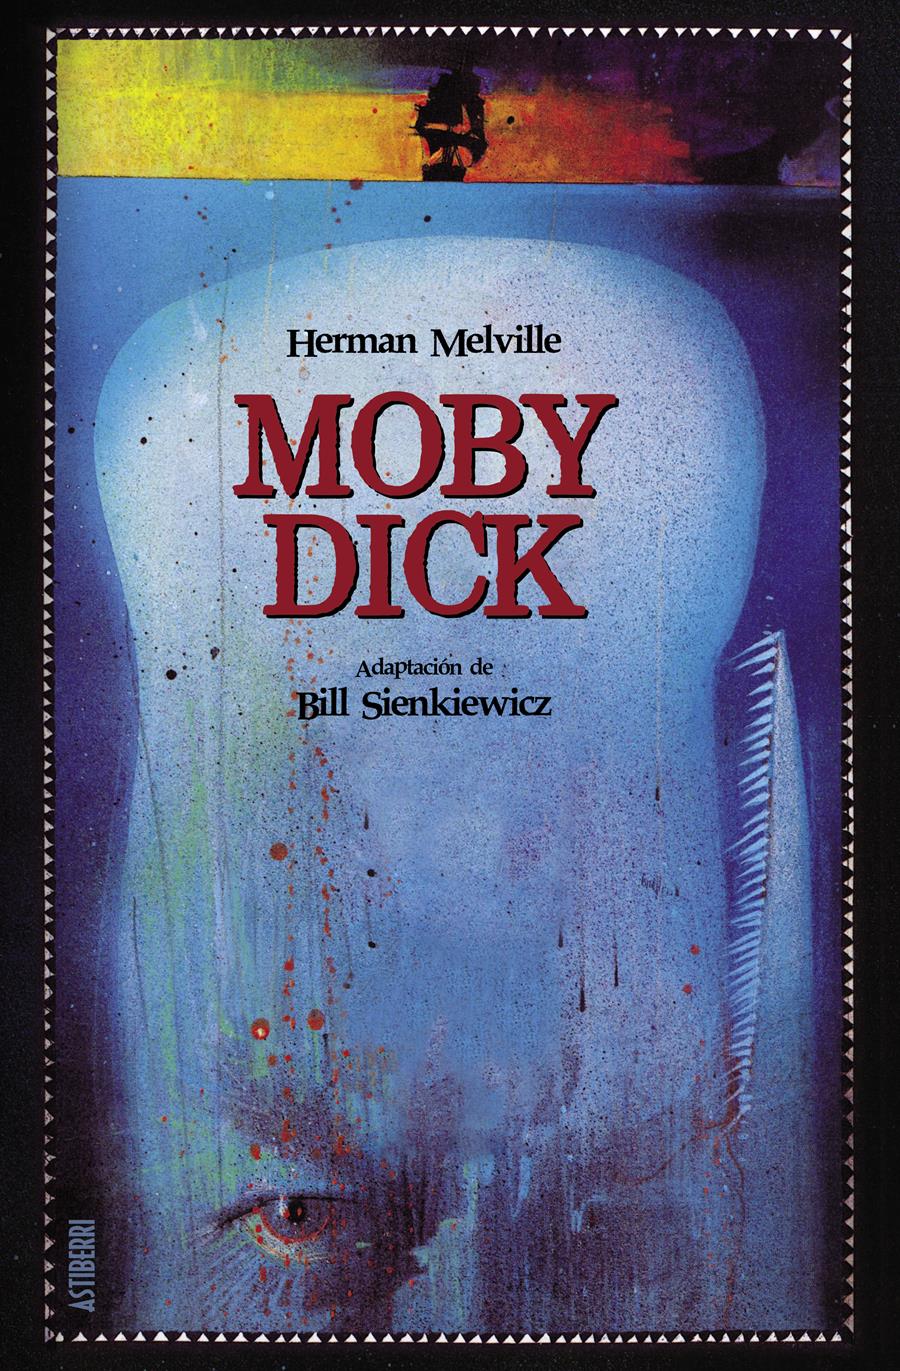 Moby Dick | N0821-AST04 | Bill Sienkiewicz | Terra de Còmic - Tu tienda de cómics online especializada en cómics, manga y merchandising